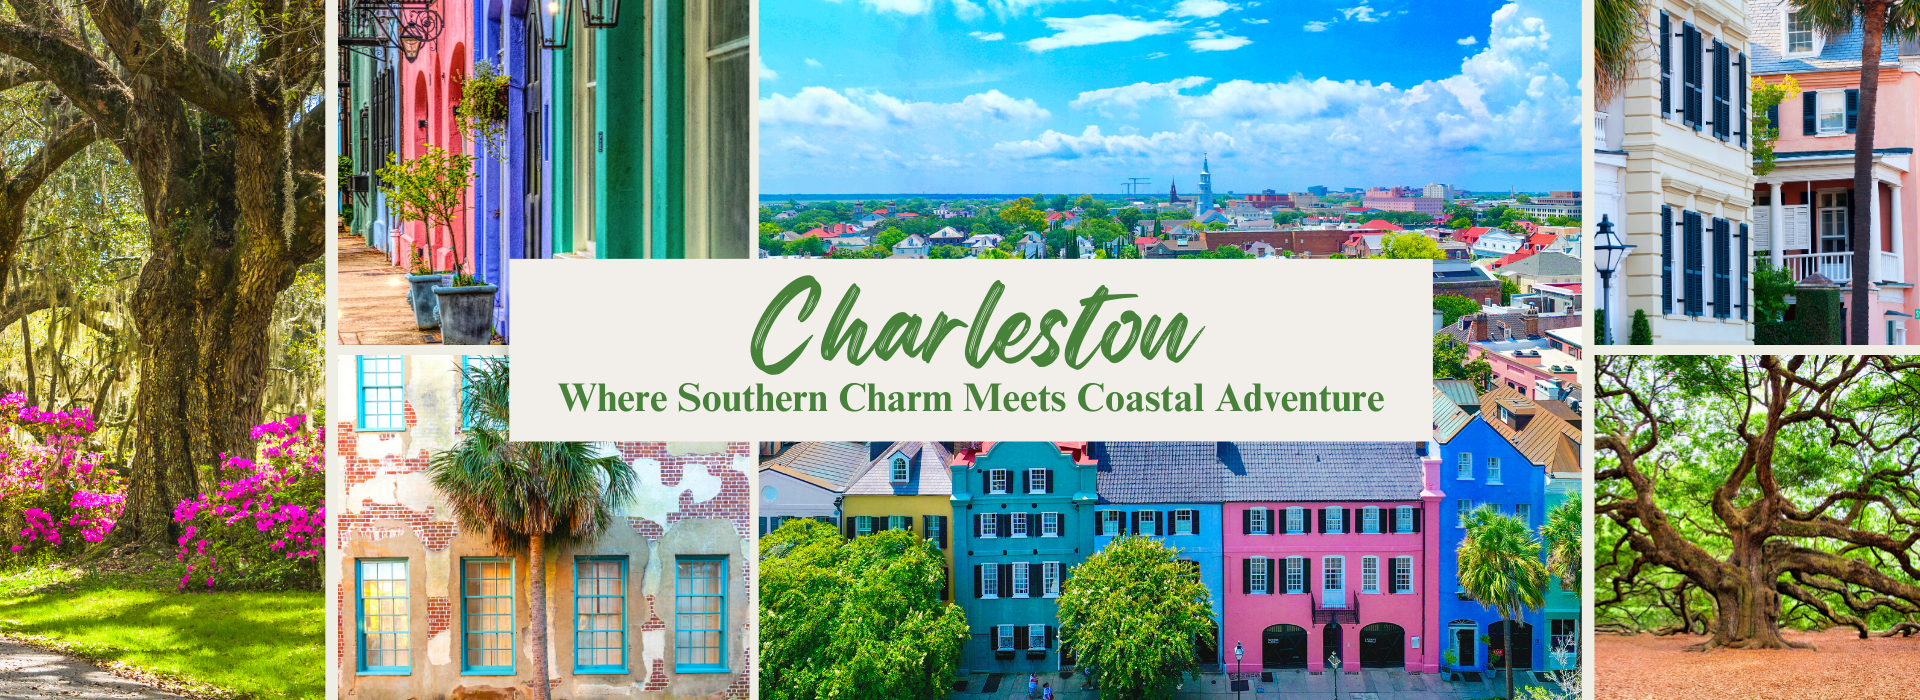 Charleston: Where Southern Charm Meets Coastal Adventure Header Image